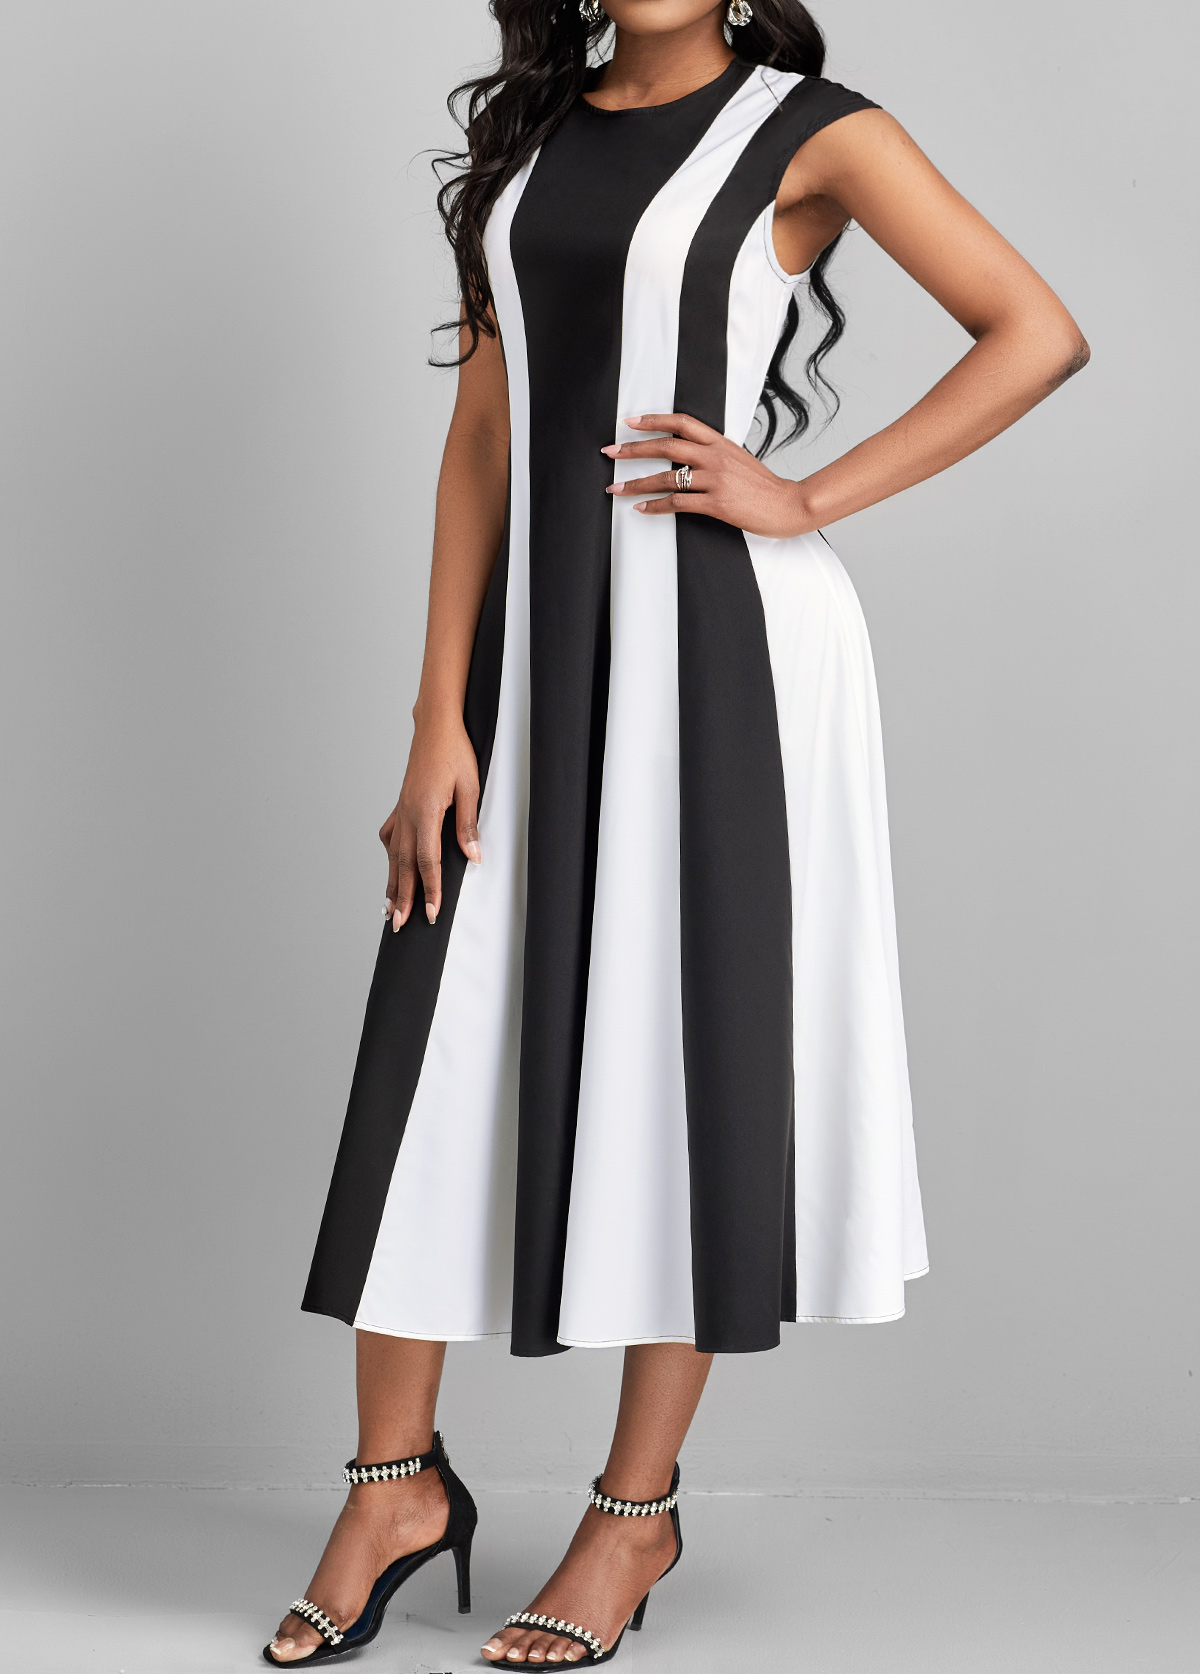 Round Neck Zipper Black Short Sleeve Dress | Rosewe.com - USD $22.99